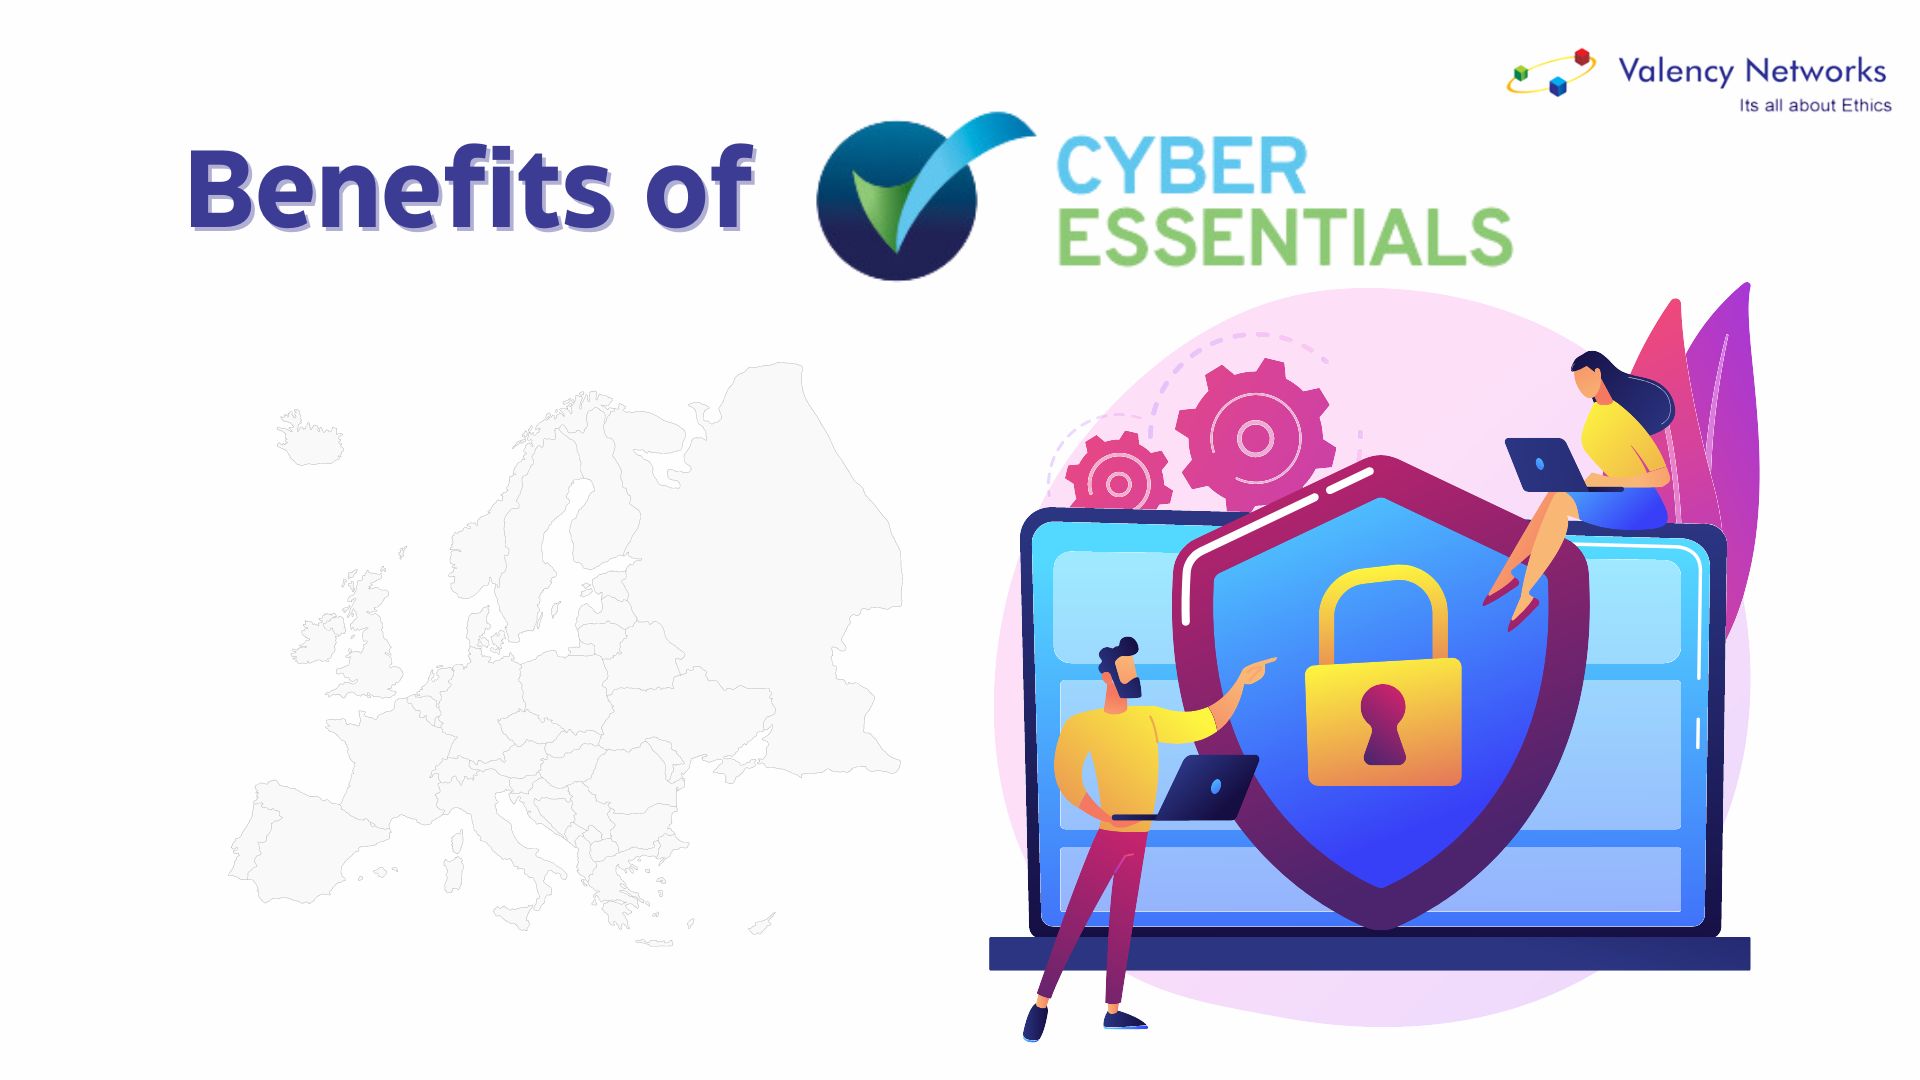 Benefits of Cyber Essentials